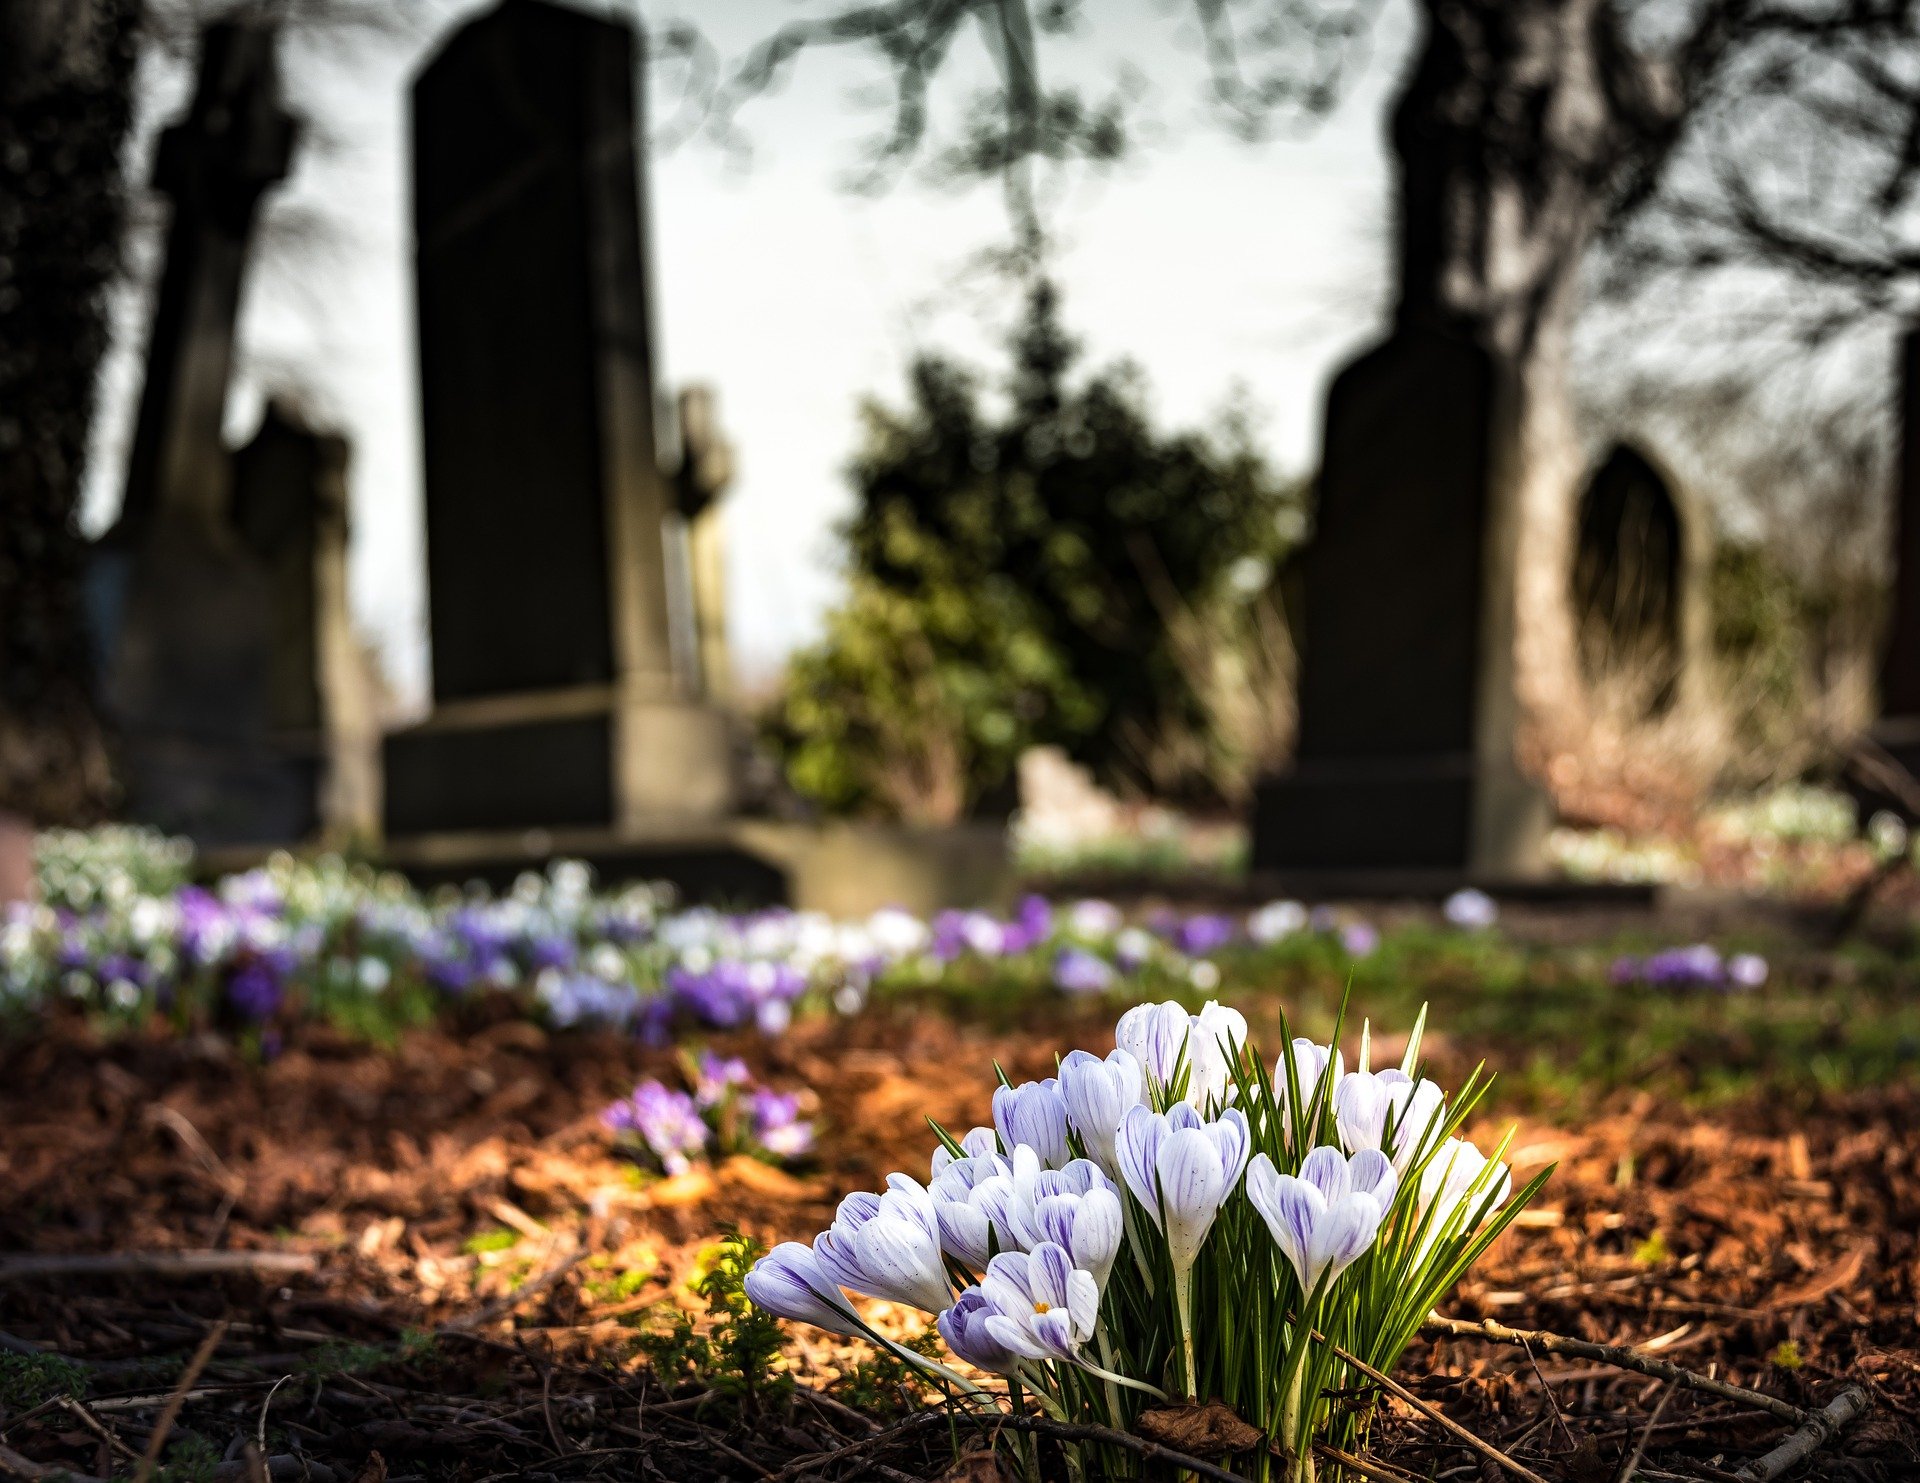 Flowers in a graveyard. | Photo: Pixabay/drippycat